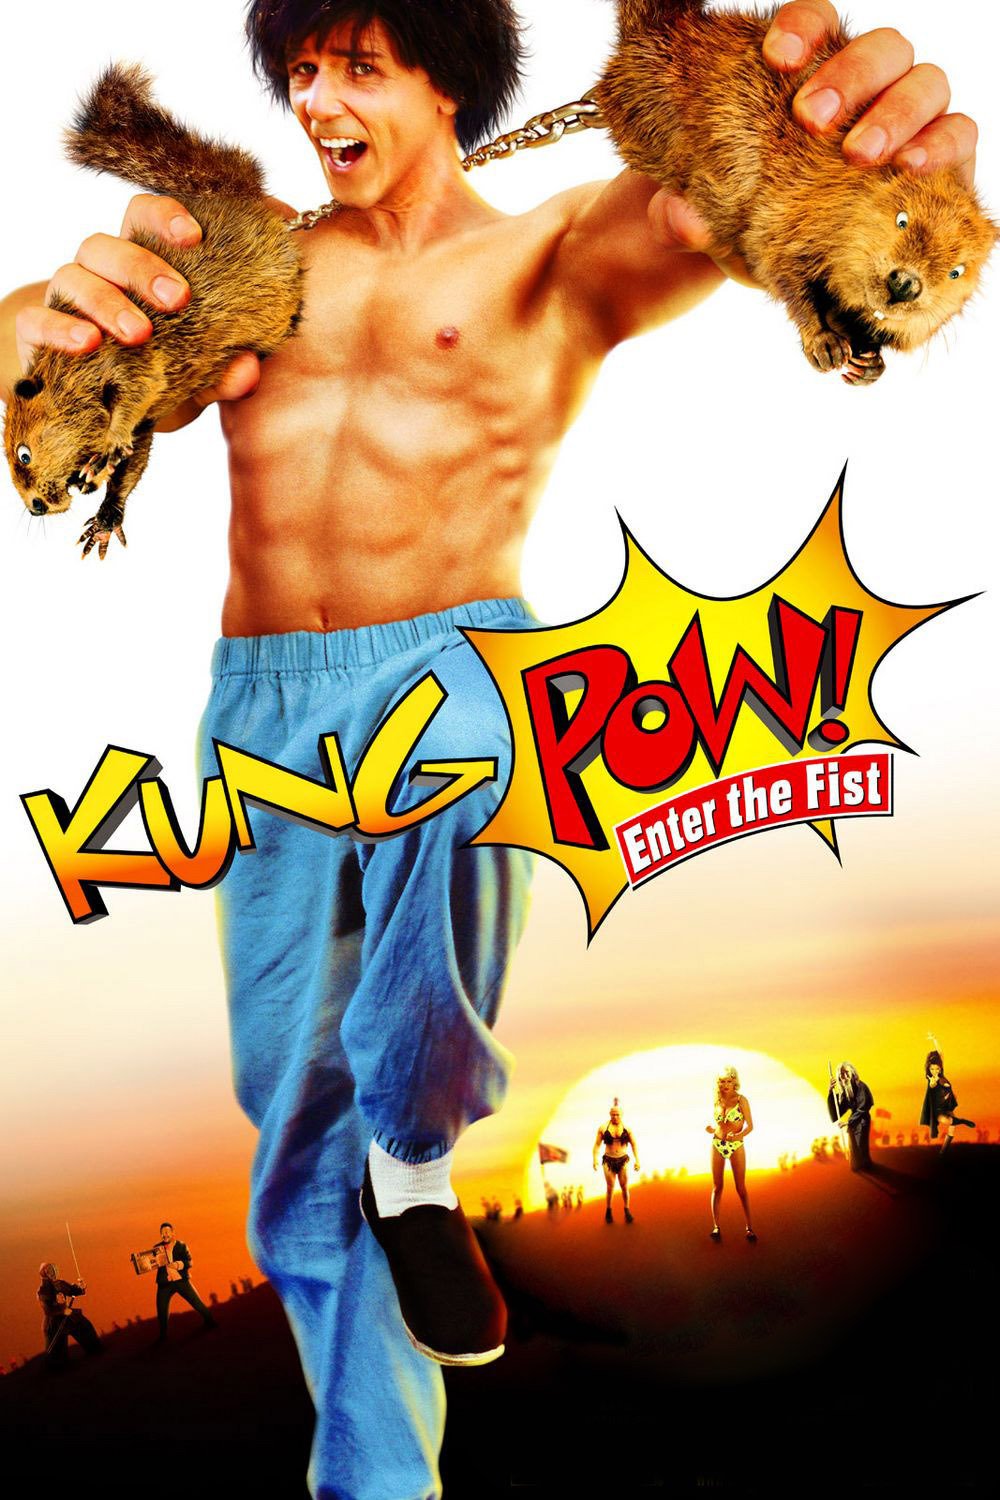 Plakat von "Kung Pow: Enter the Fist"